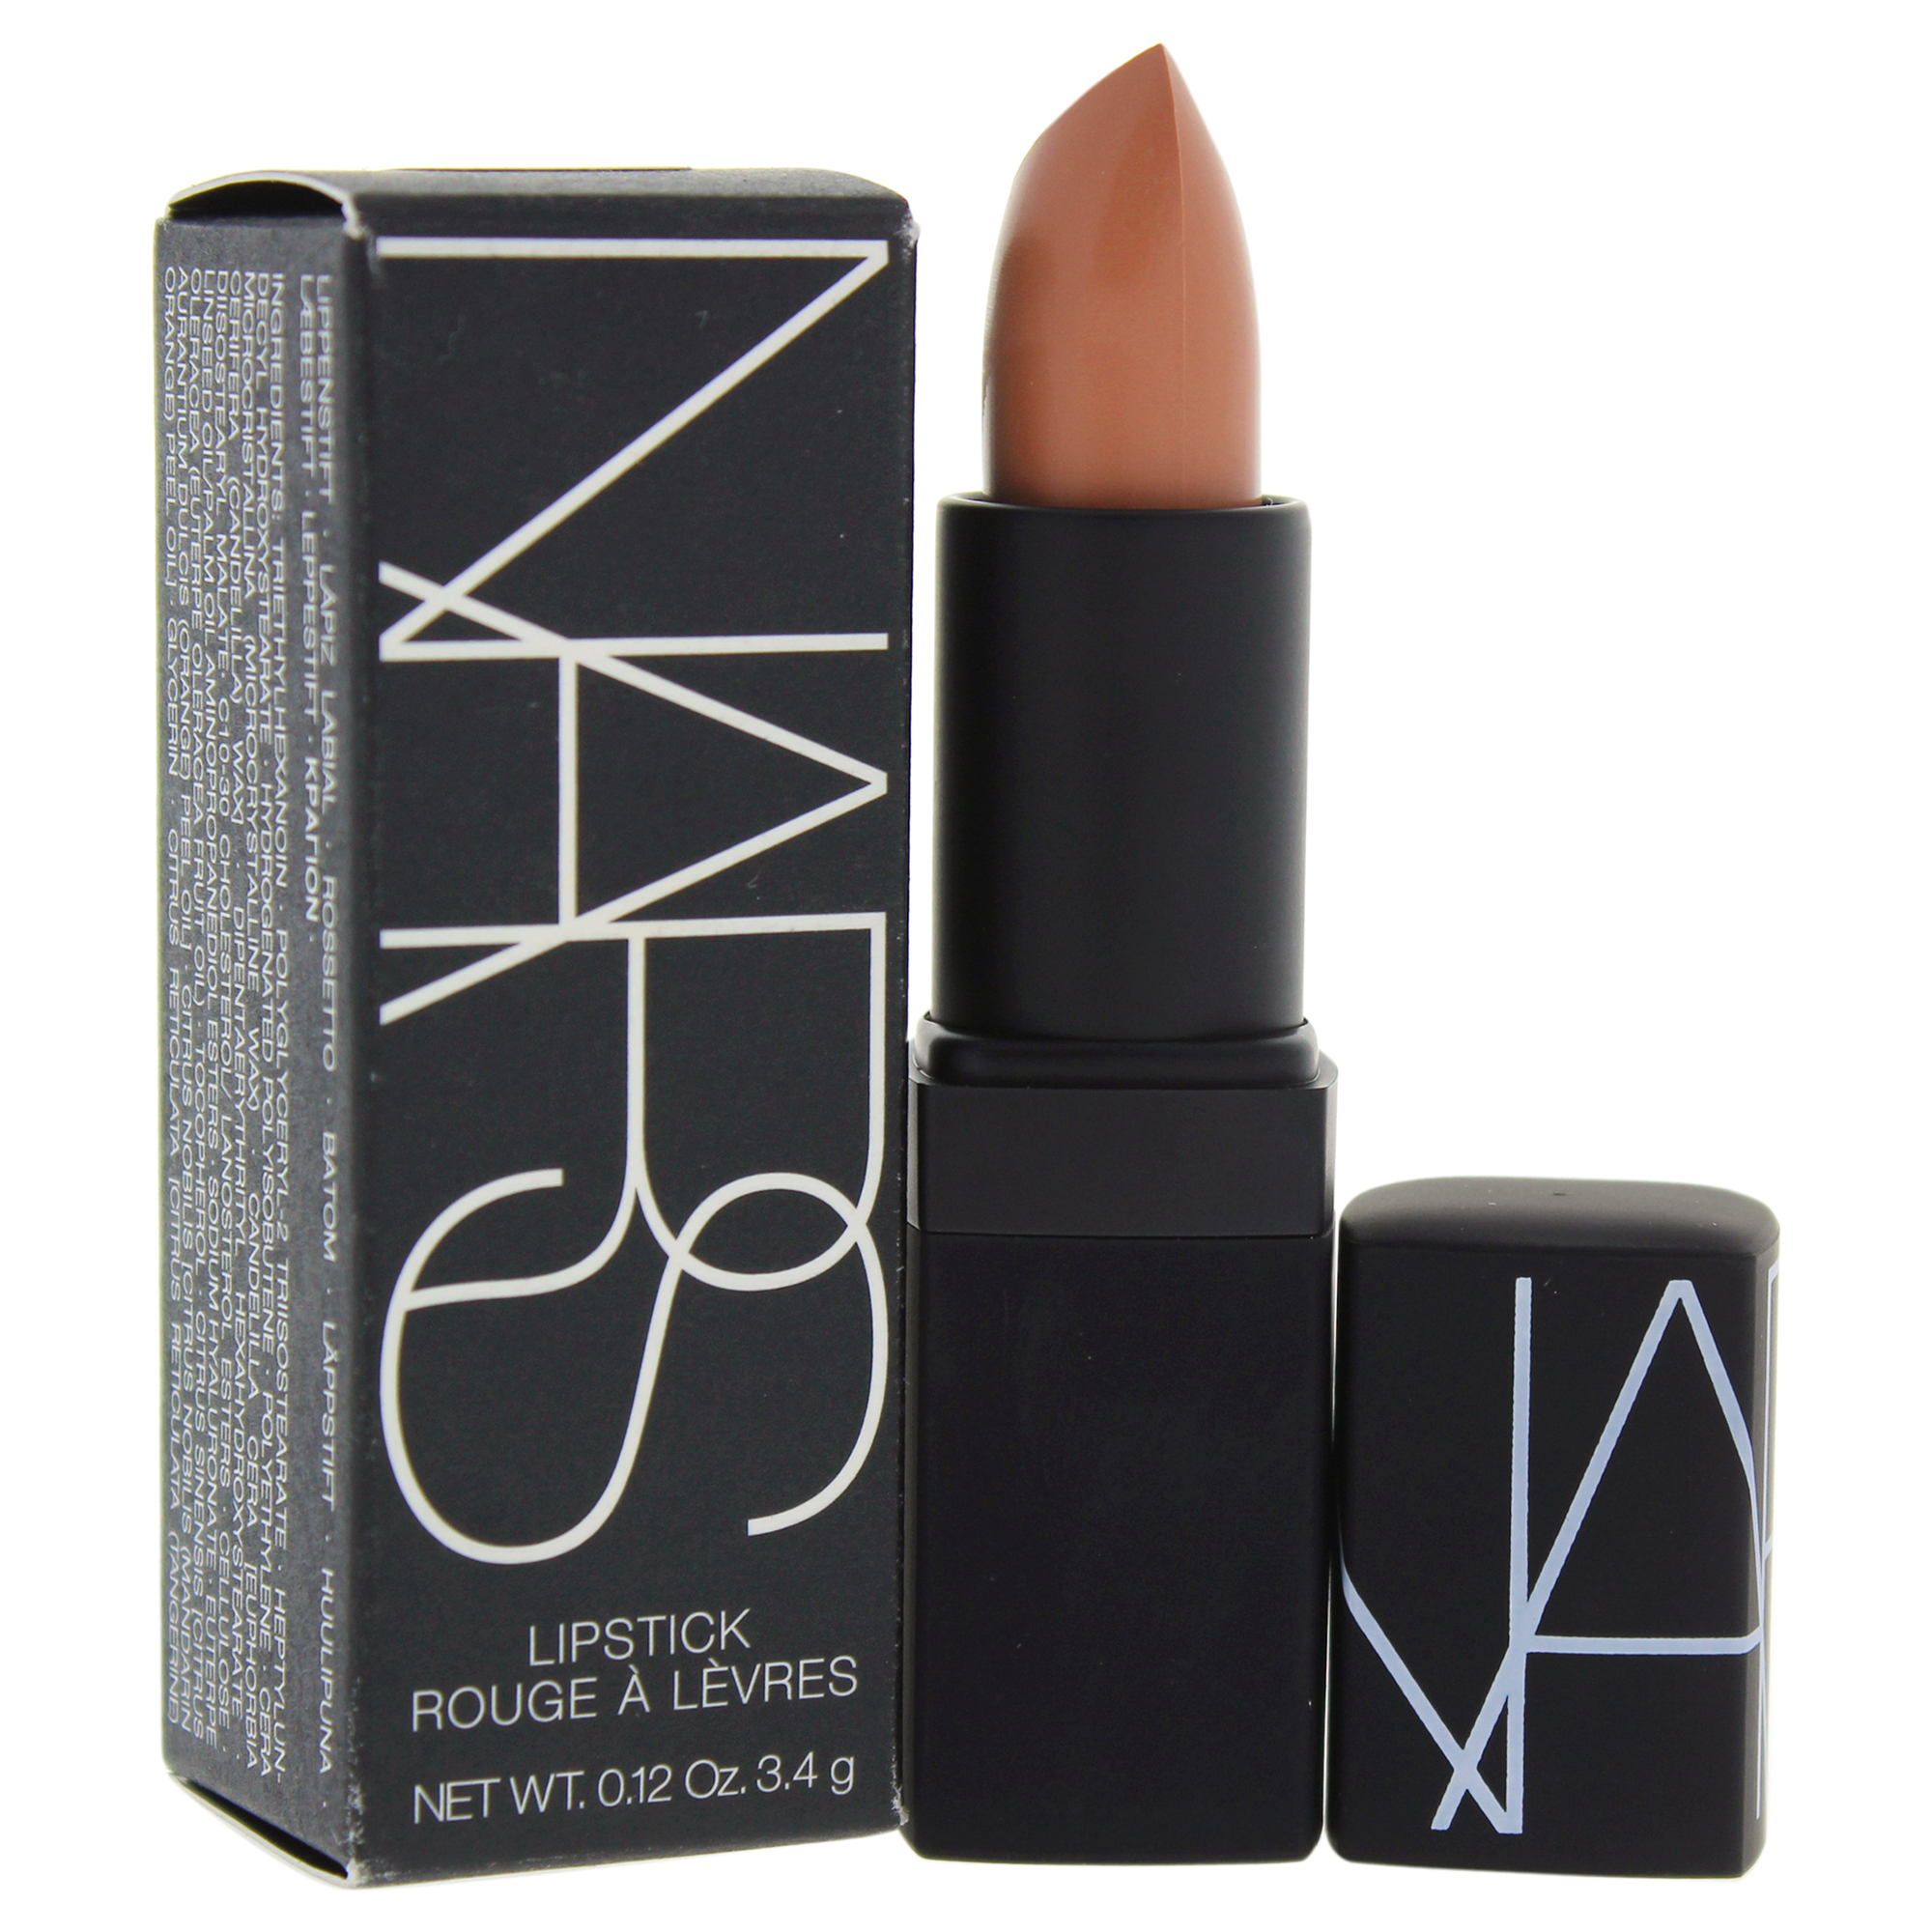 Lipstick - Belle De Jour by NARS for Women - 0.12 oz Lipstick